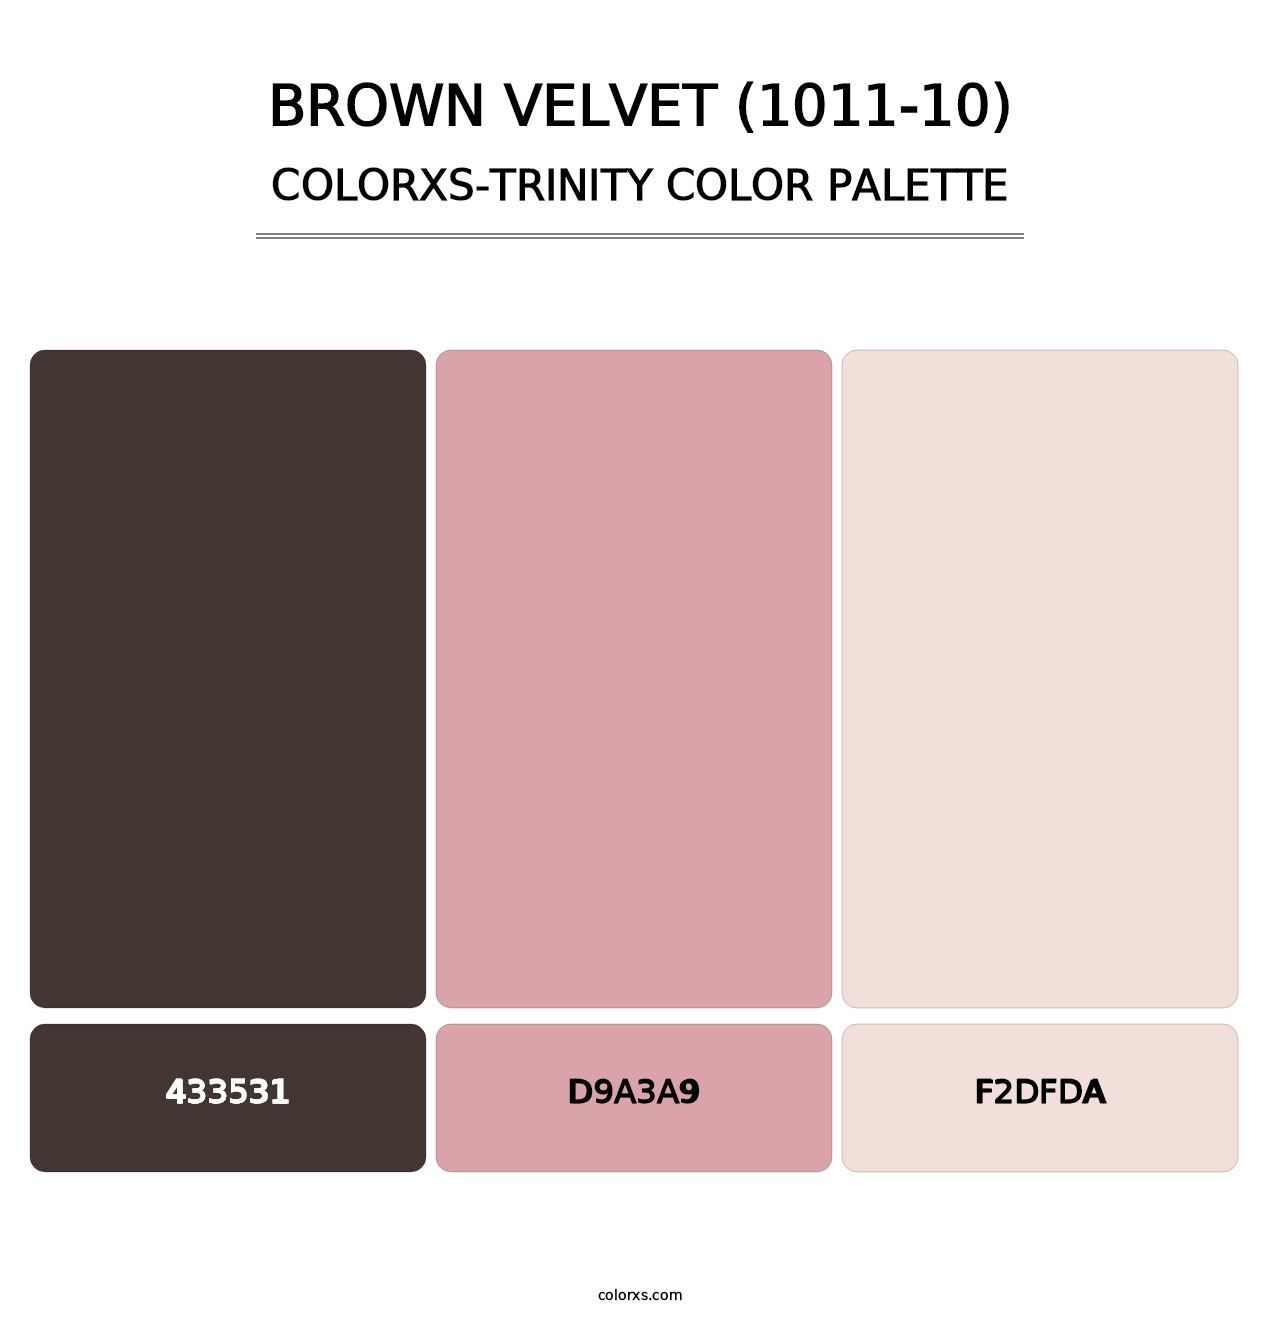 Brown Velvet (1011-10) - Colorxs Trinity Palette